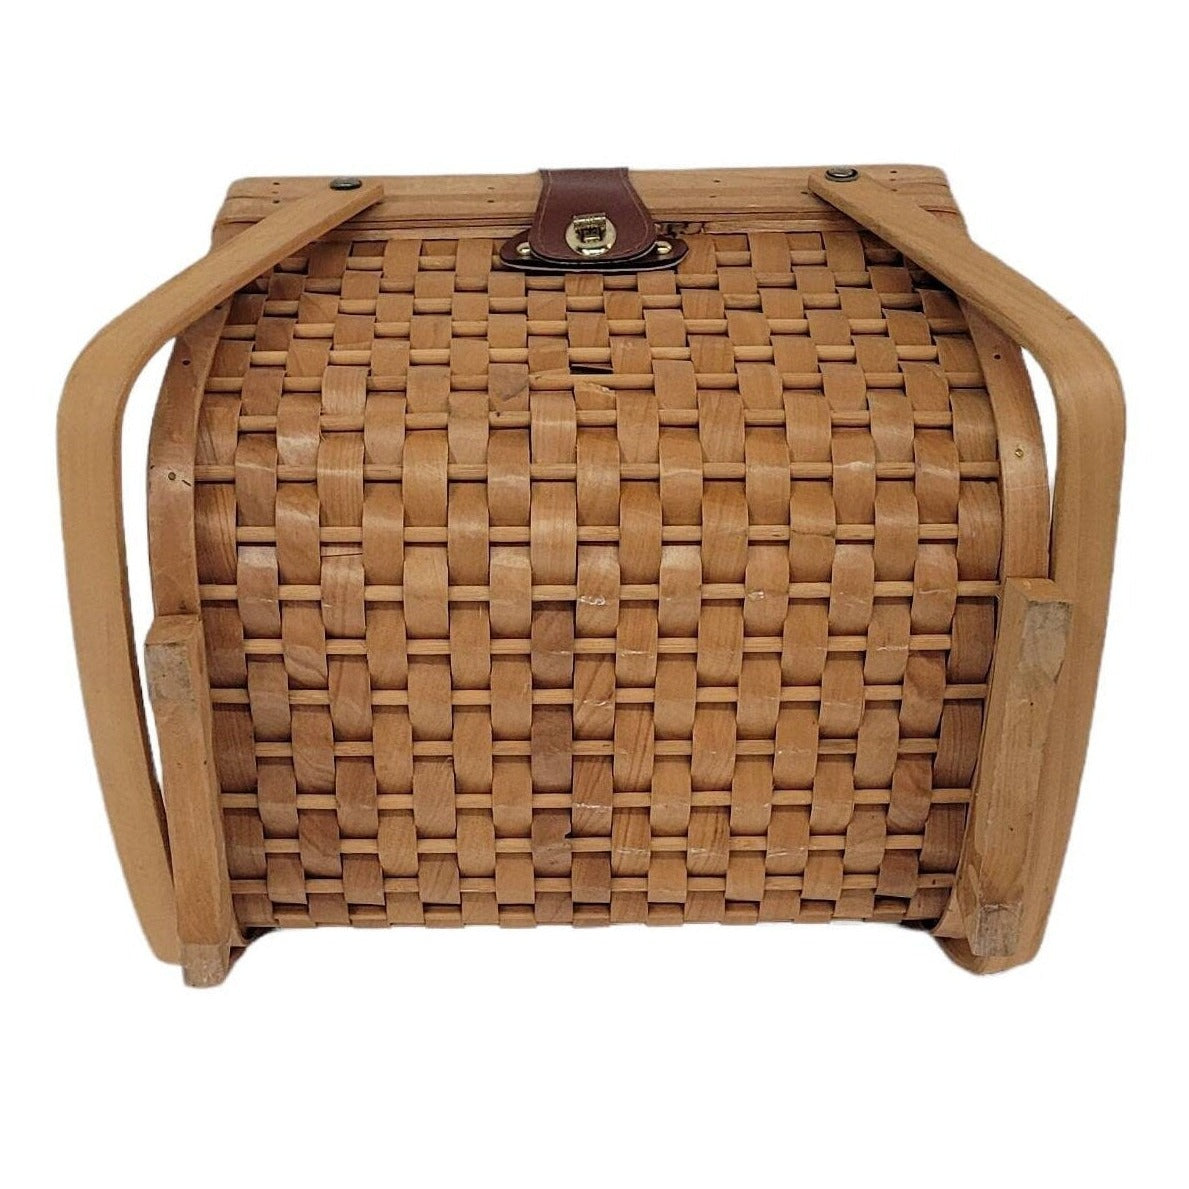 wicker picnic basket sewing basket storage organization